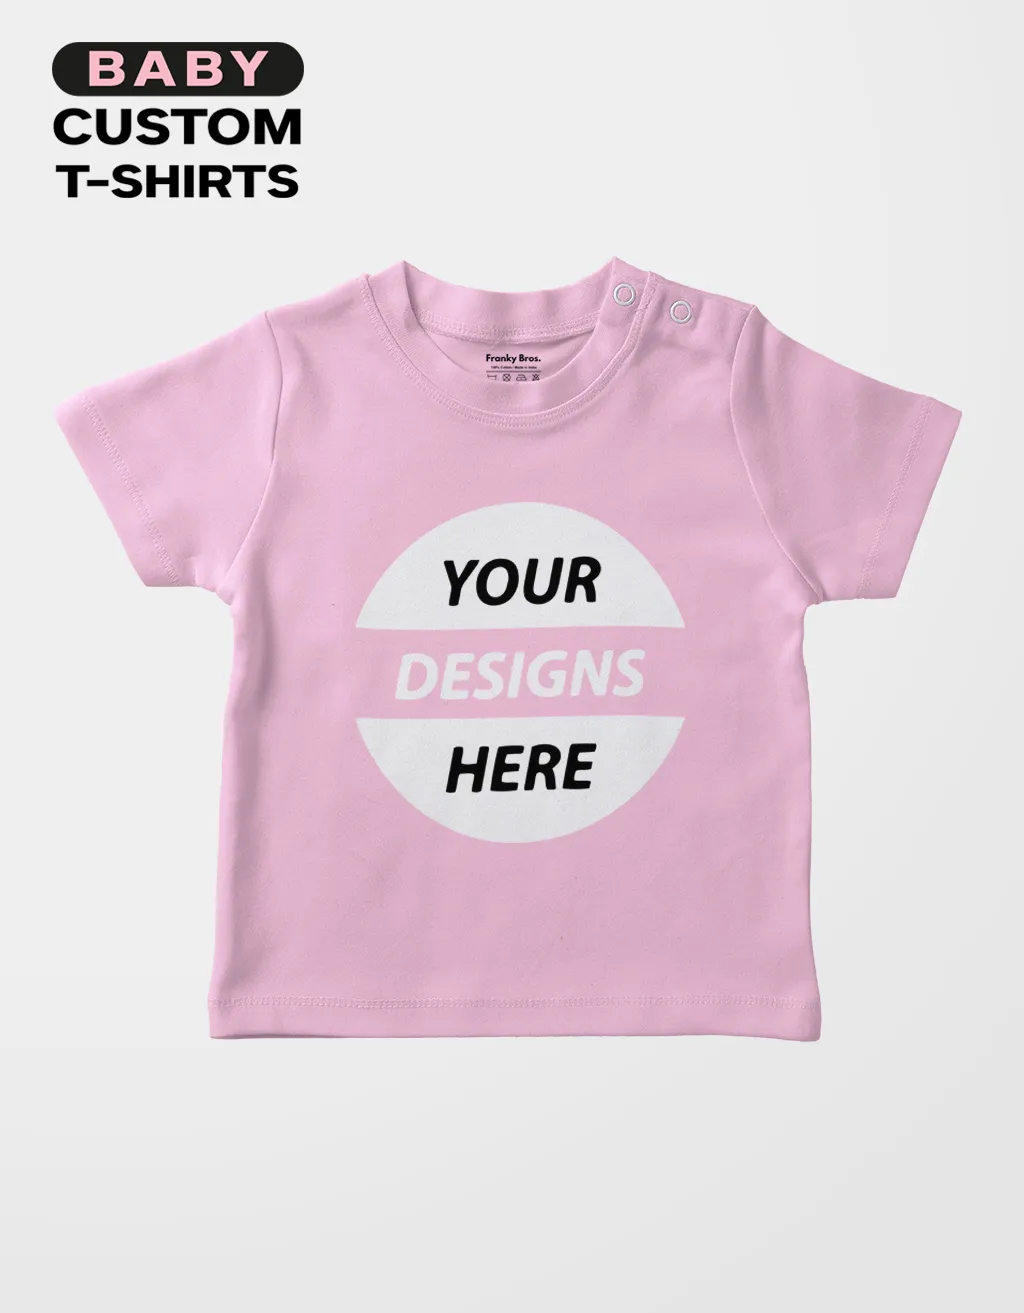 customized t shirt for baby boy and girl newborn t shirt photo printing in kolkata online